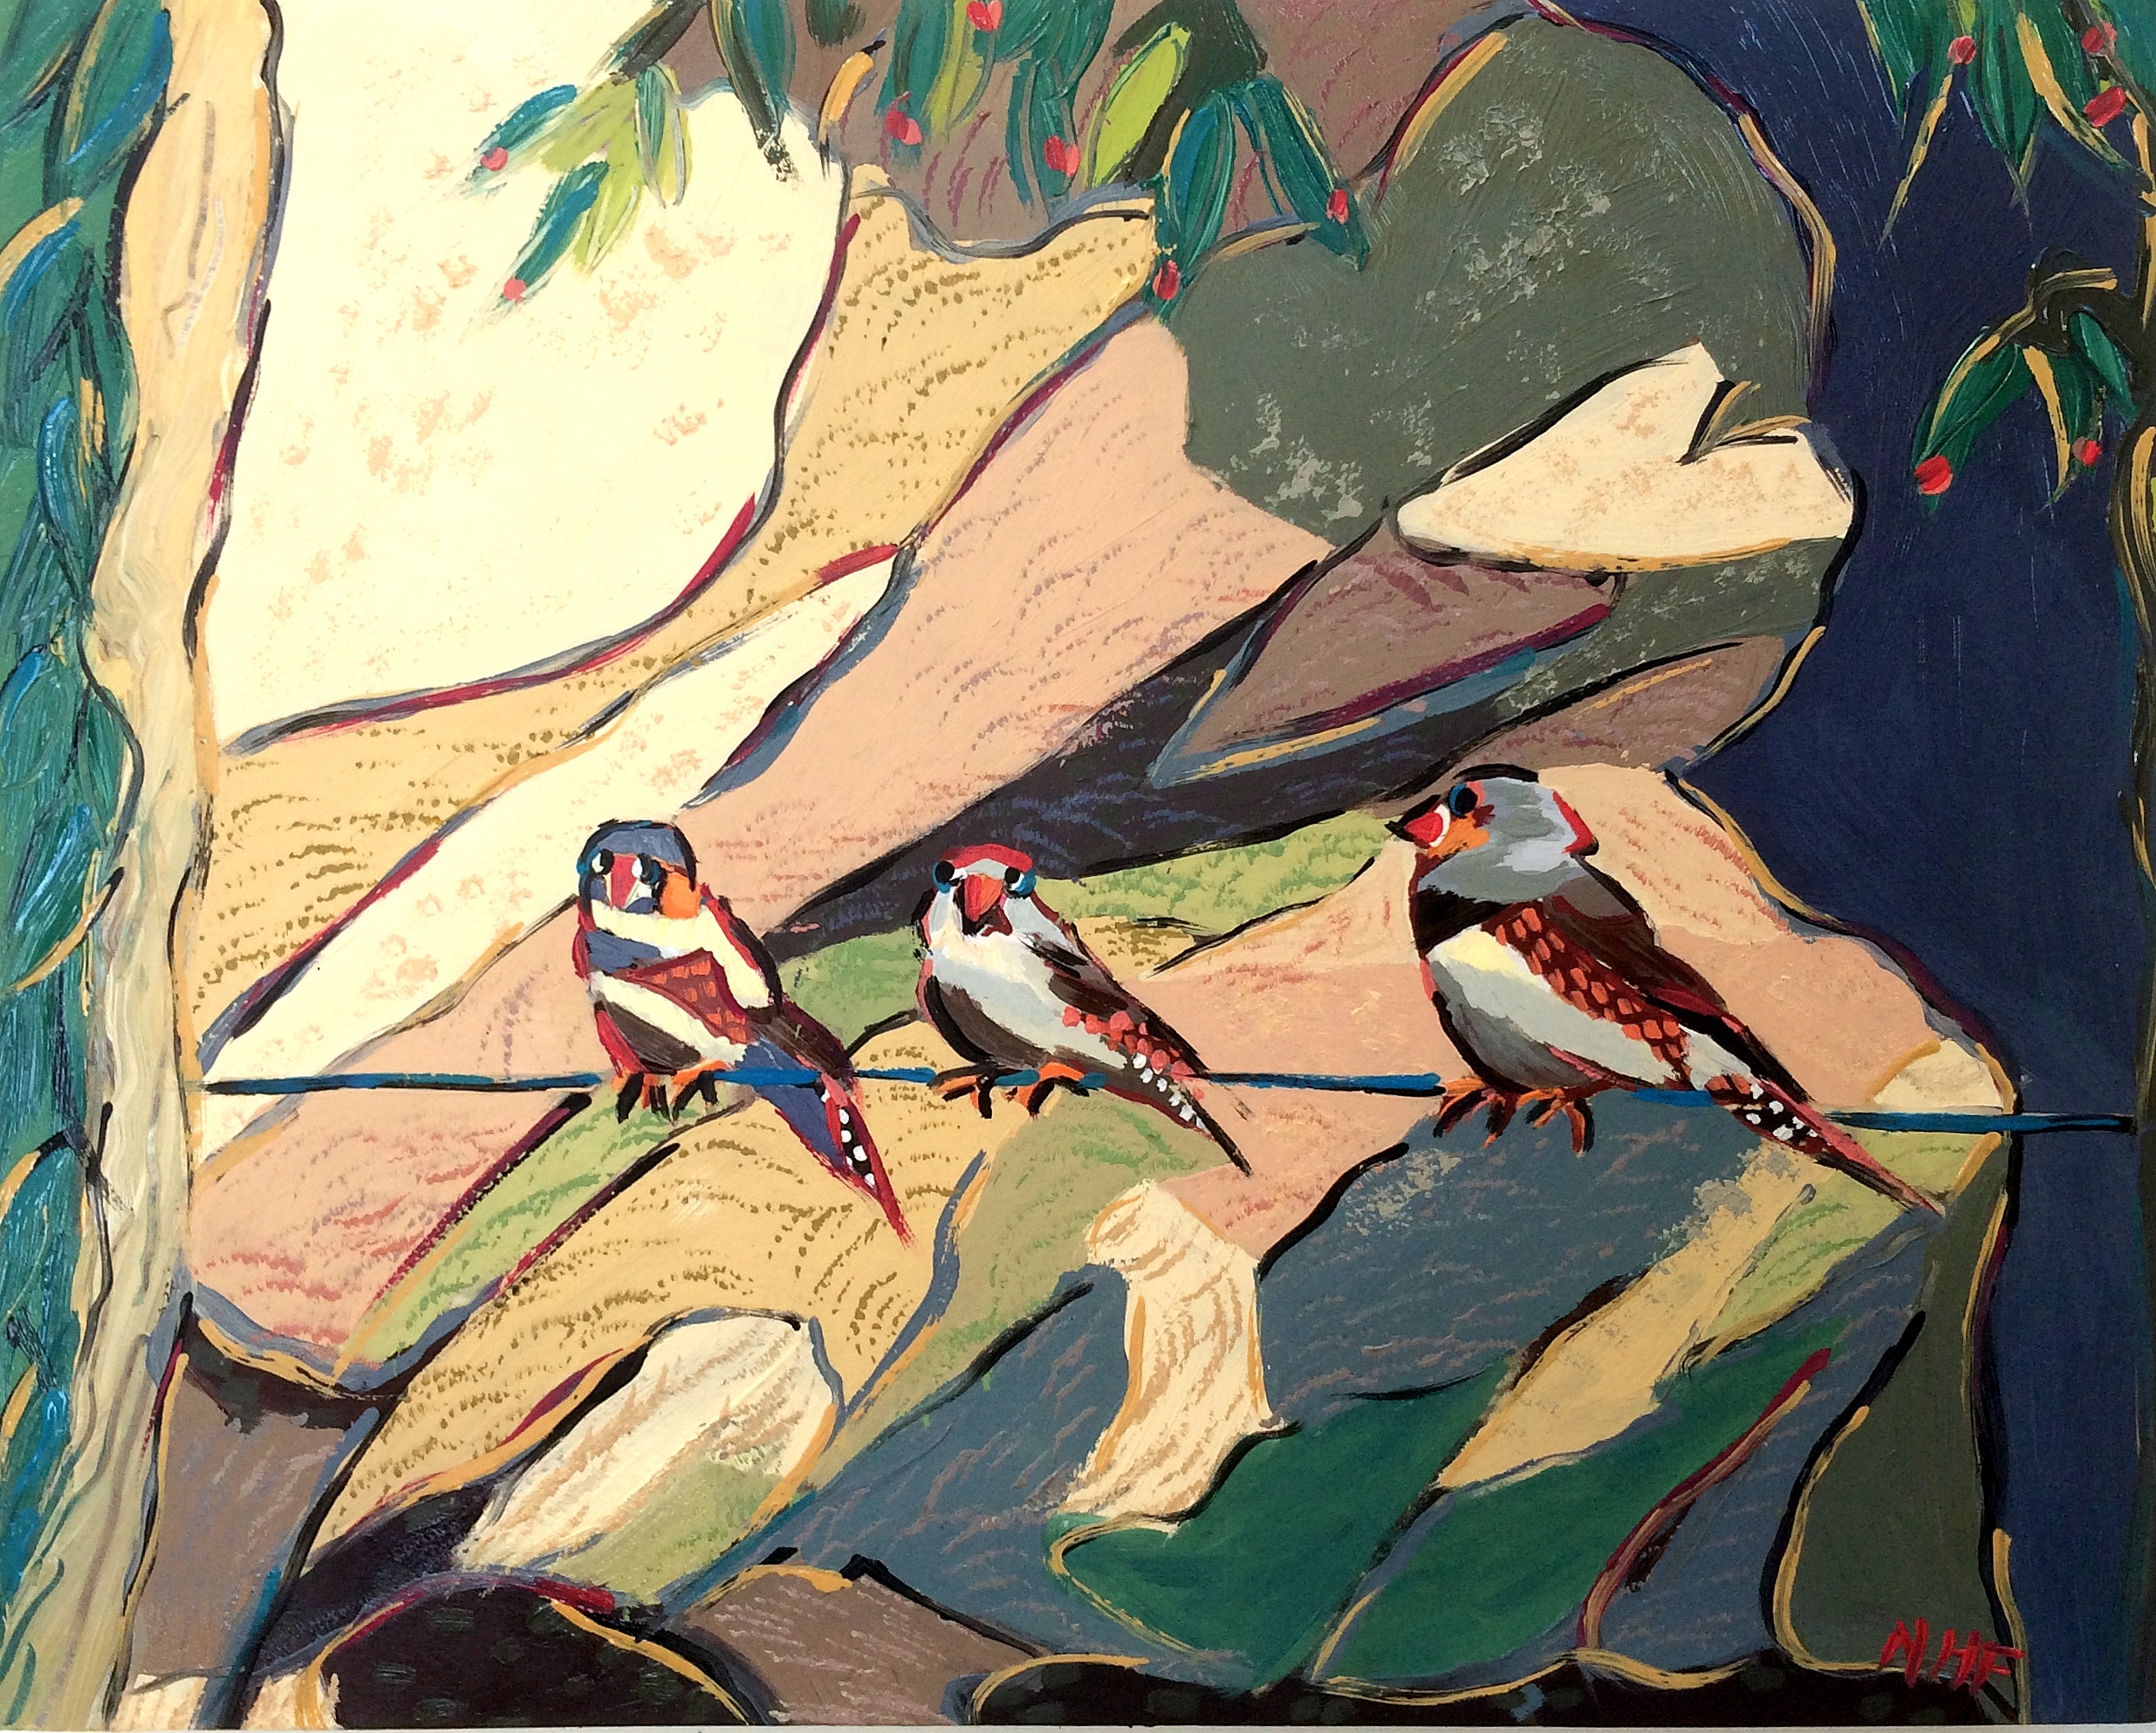   Birds Down Under 3 , oil on panel, 8x10, SOLD 